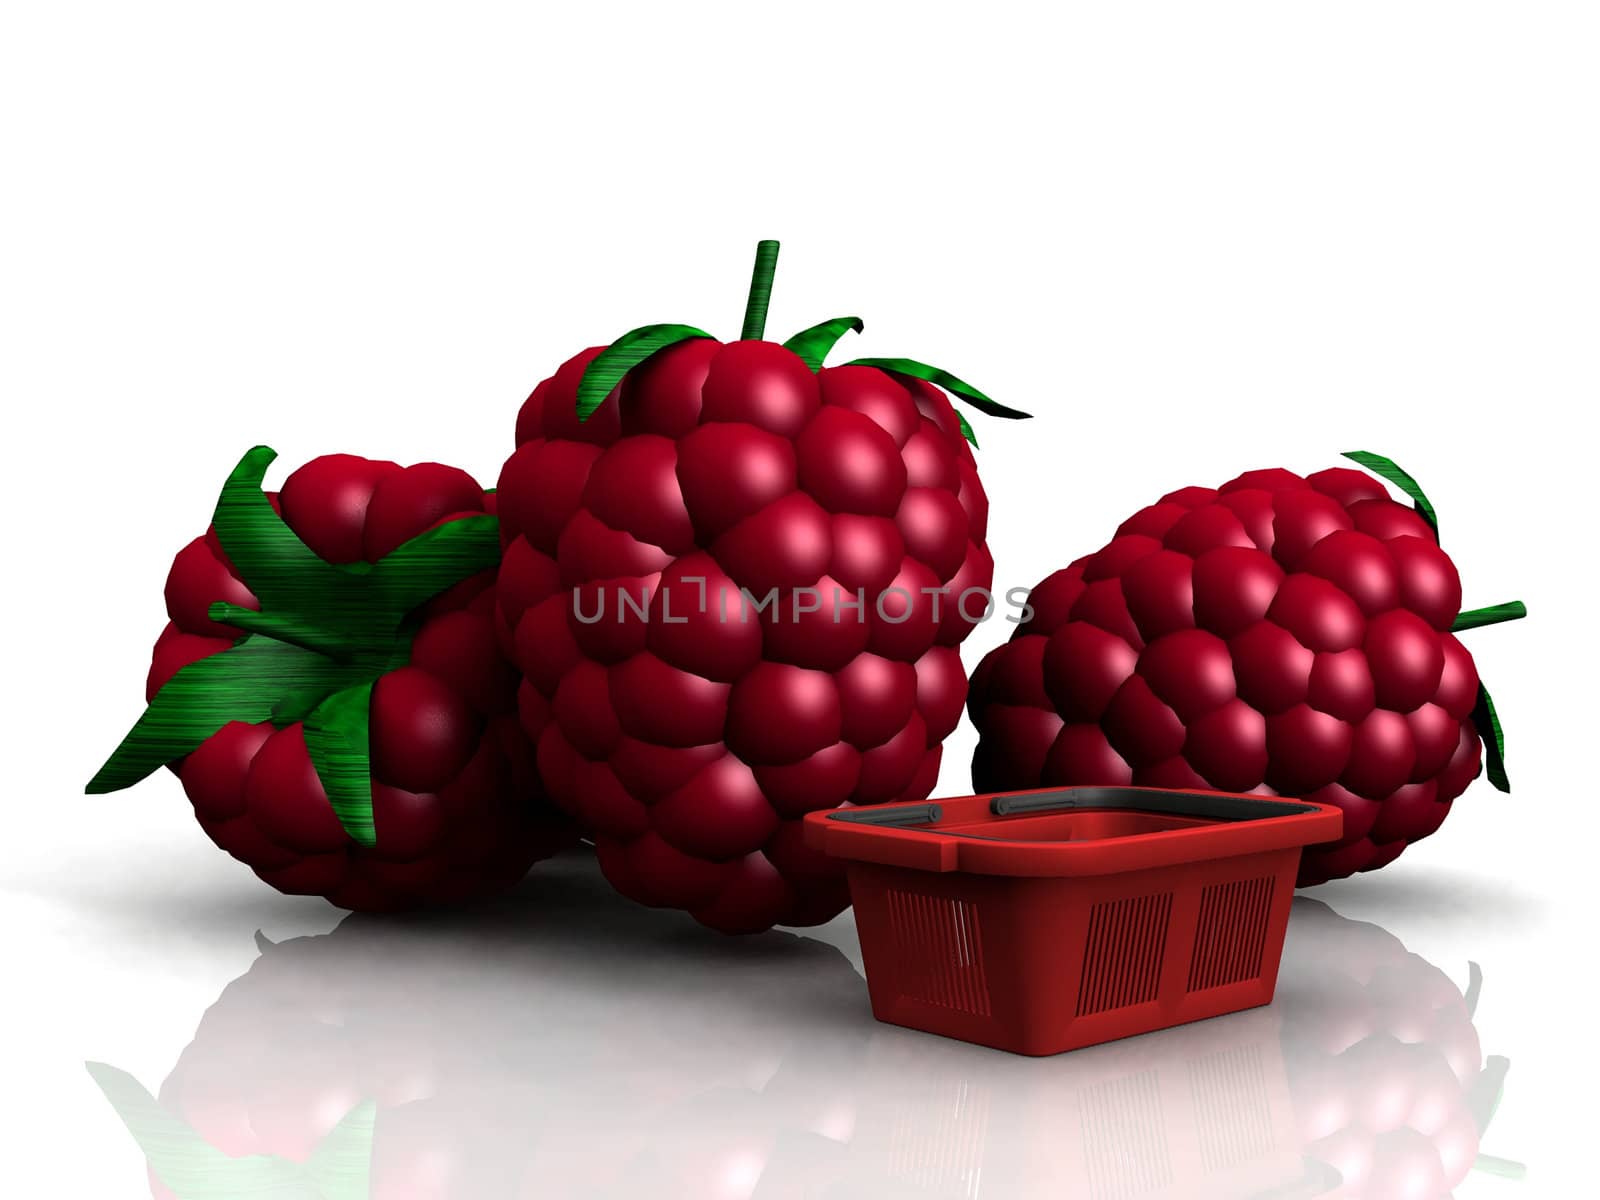 the raspberries and the basket by njaj